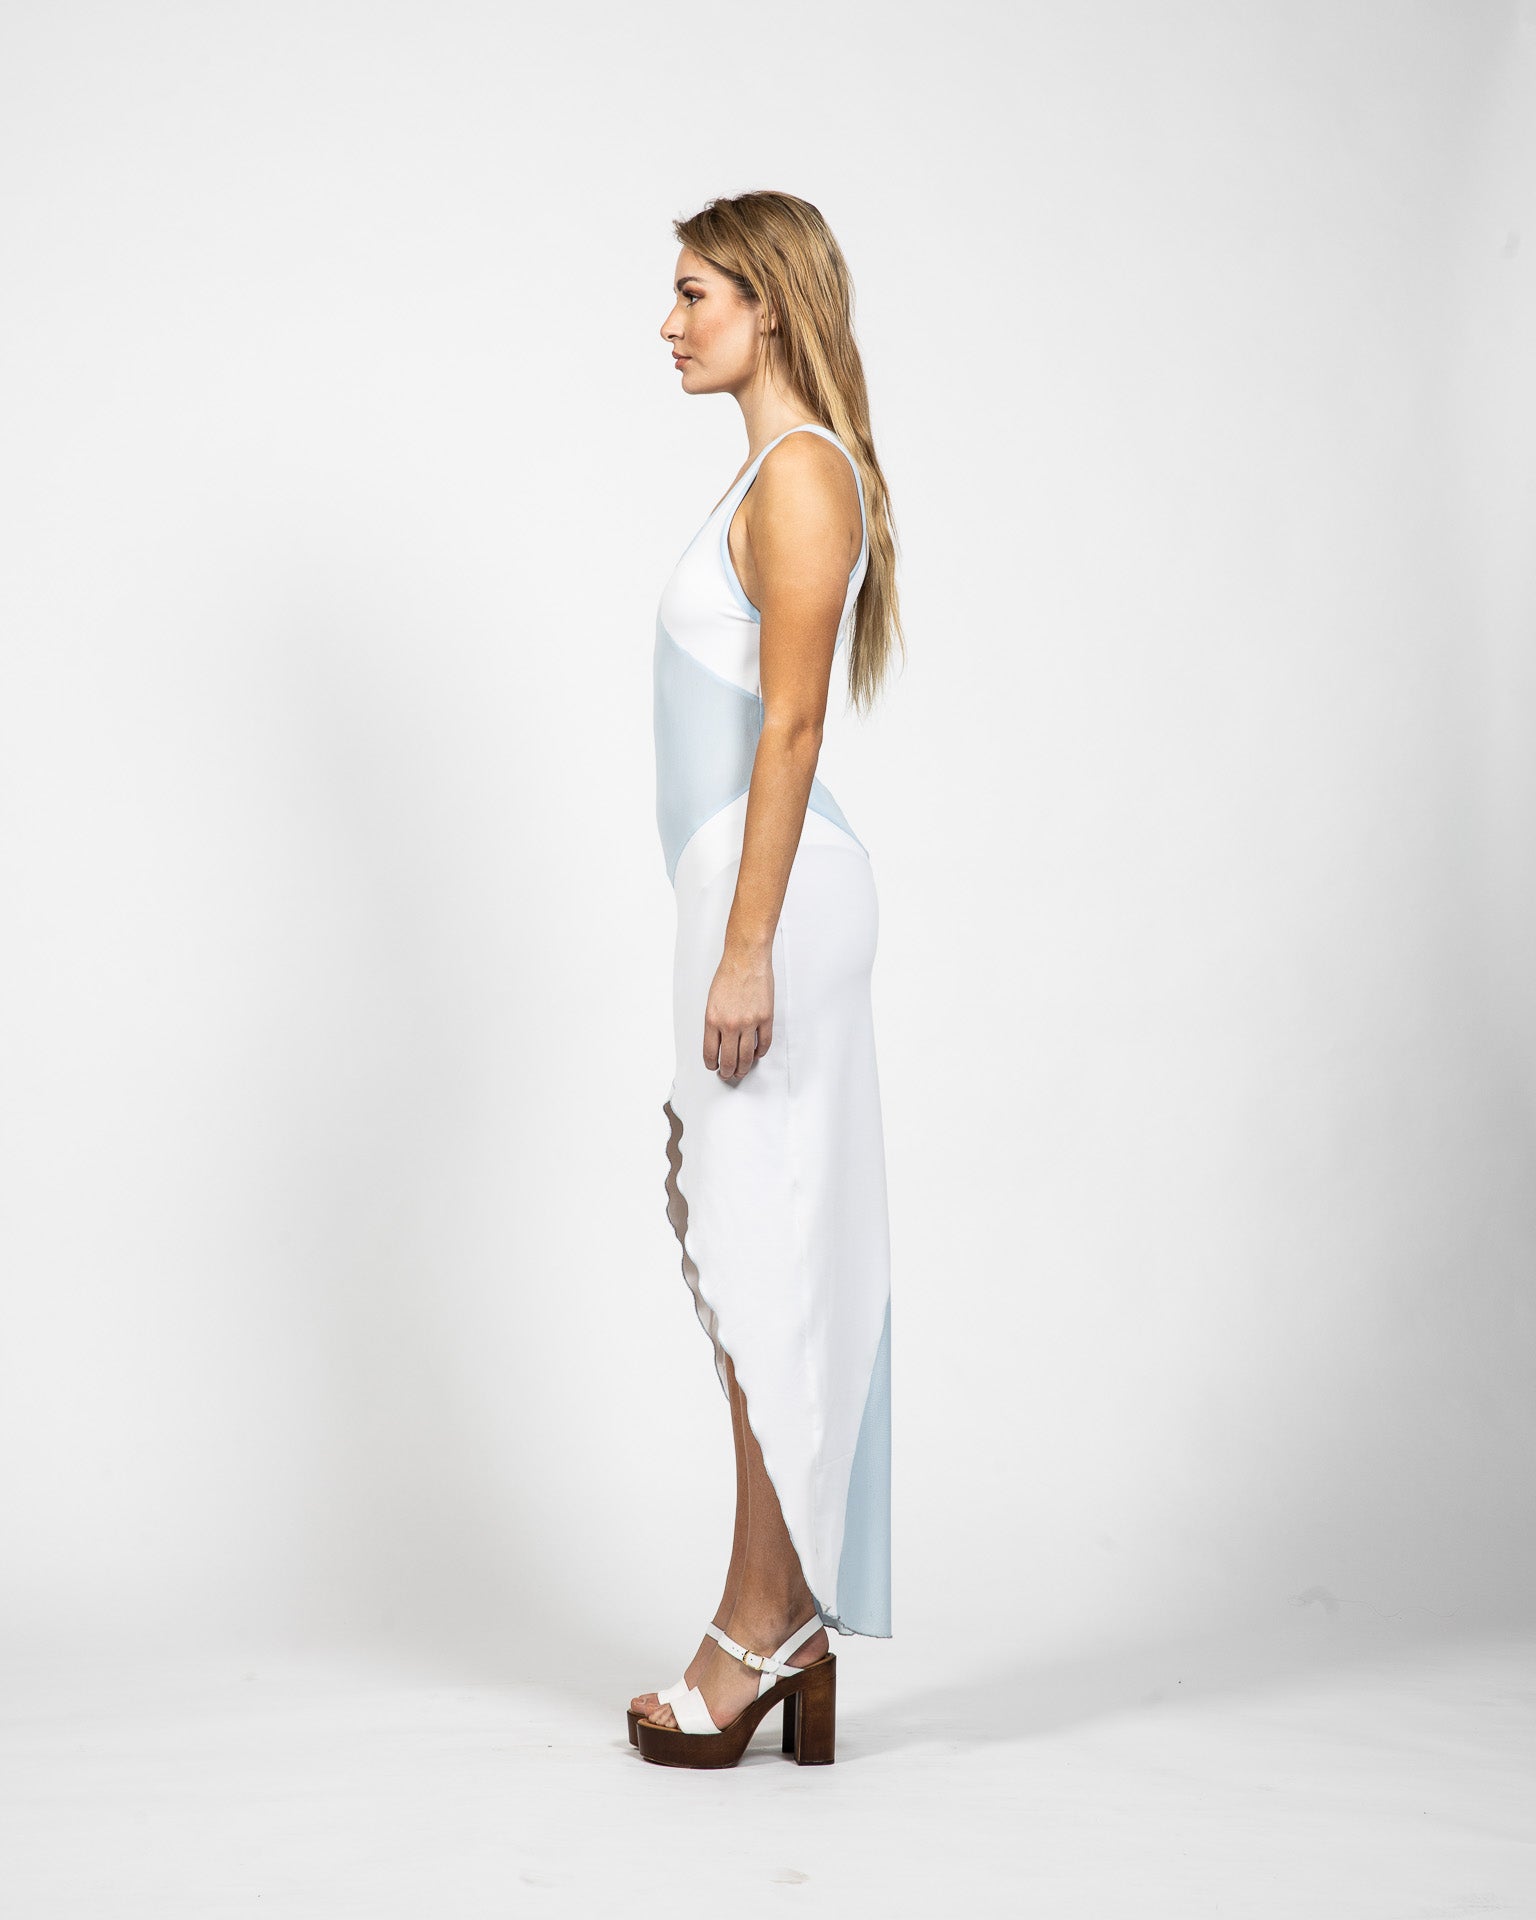 White V – Neck Dress With Blue Panels - Side View - Samuel Vartan